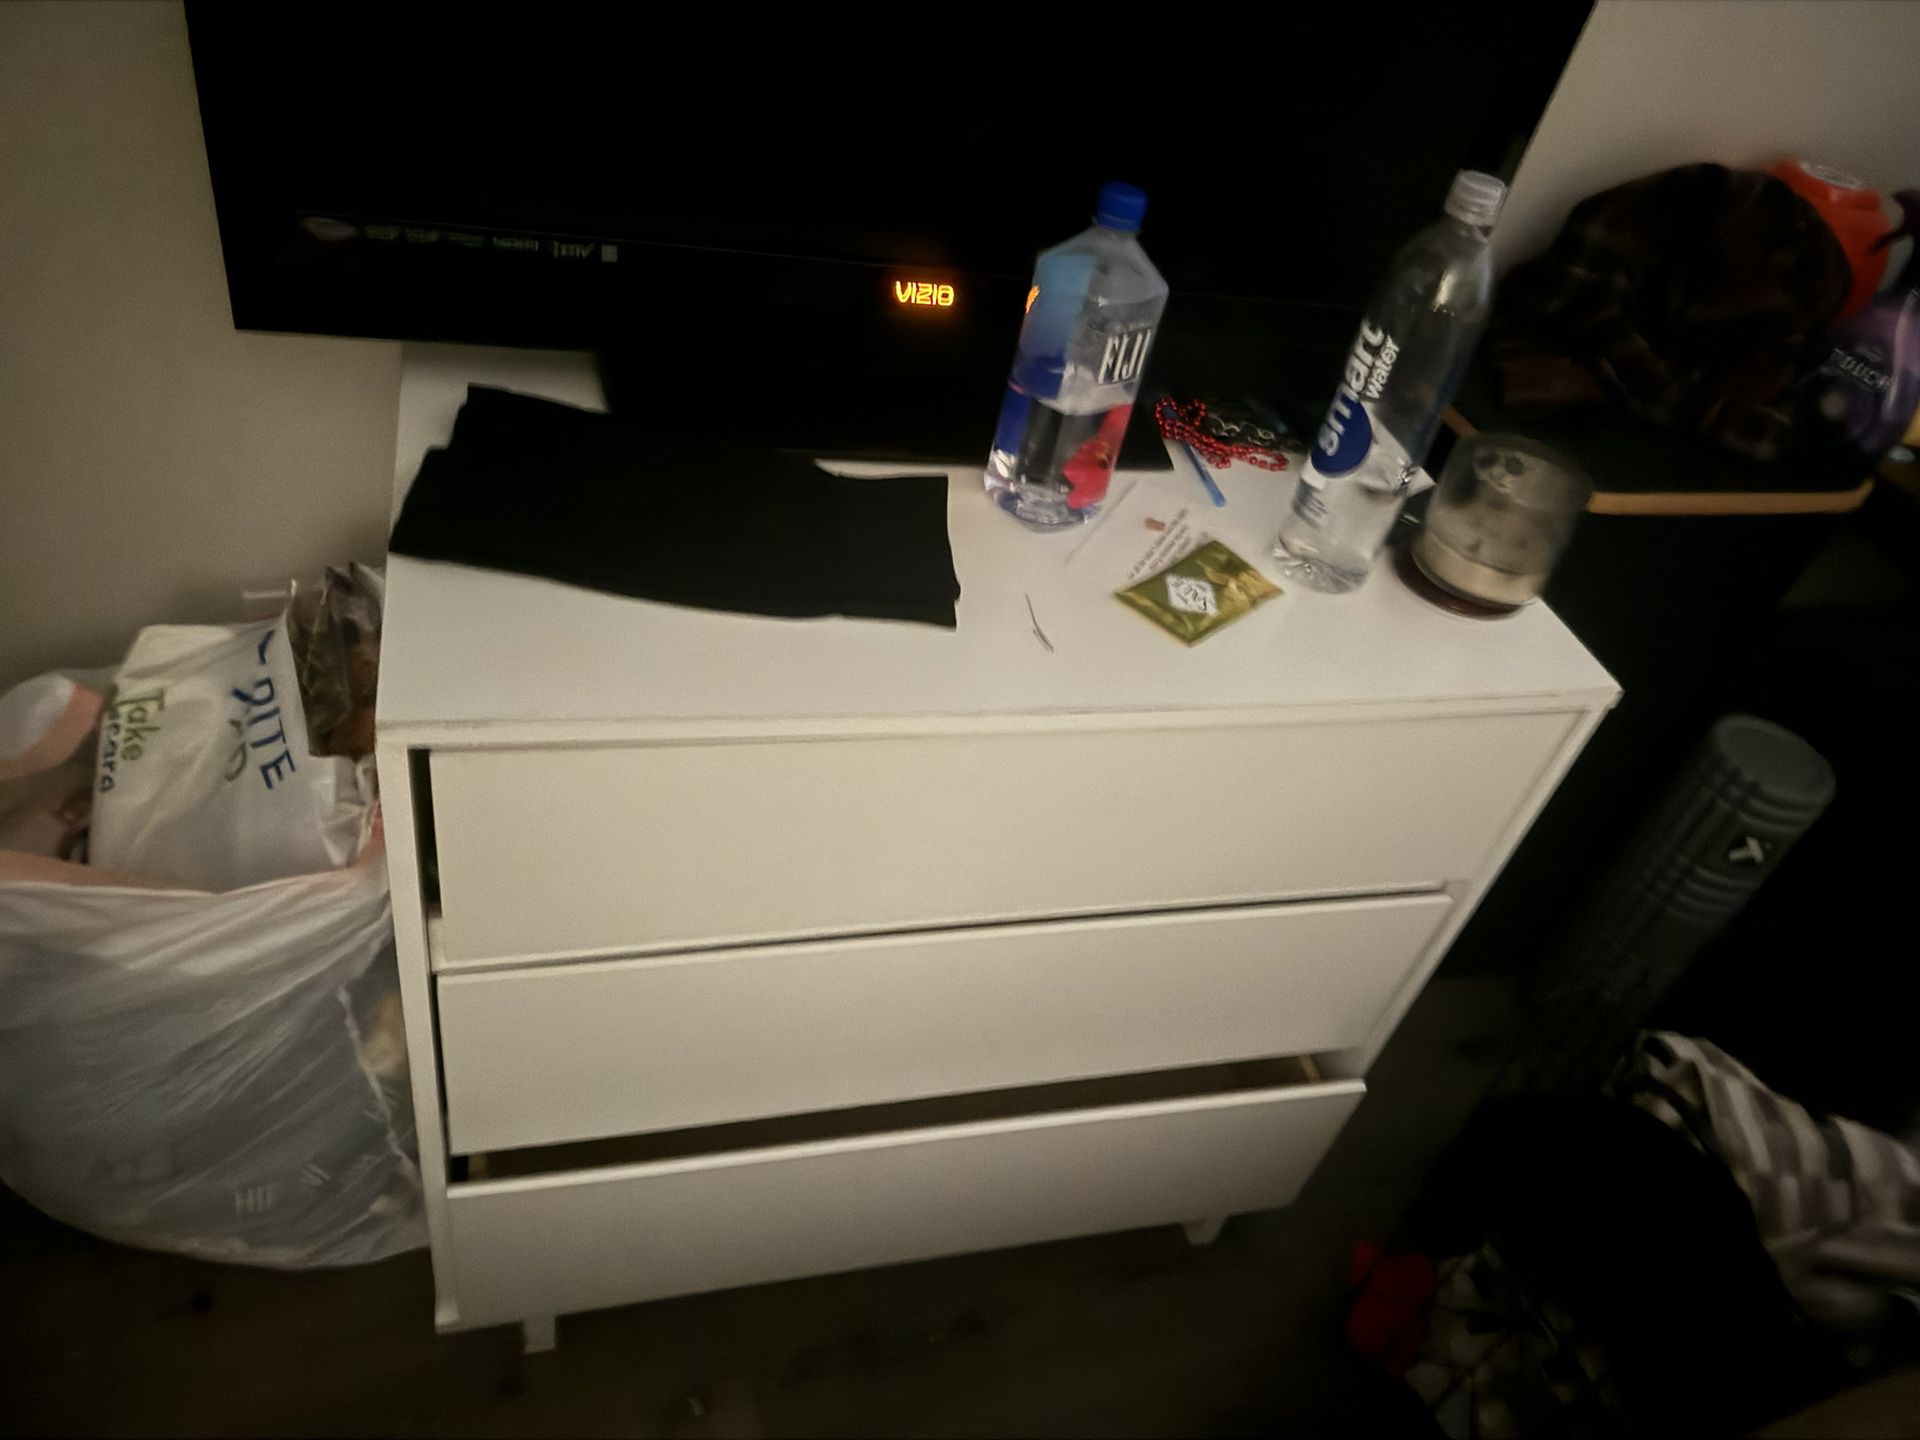 White Dresser